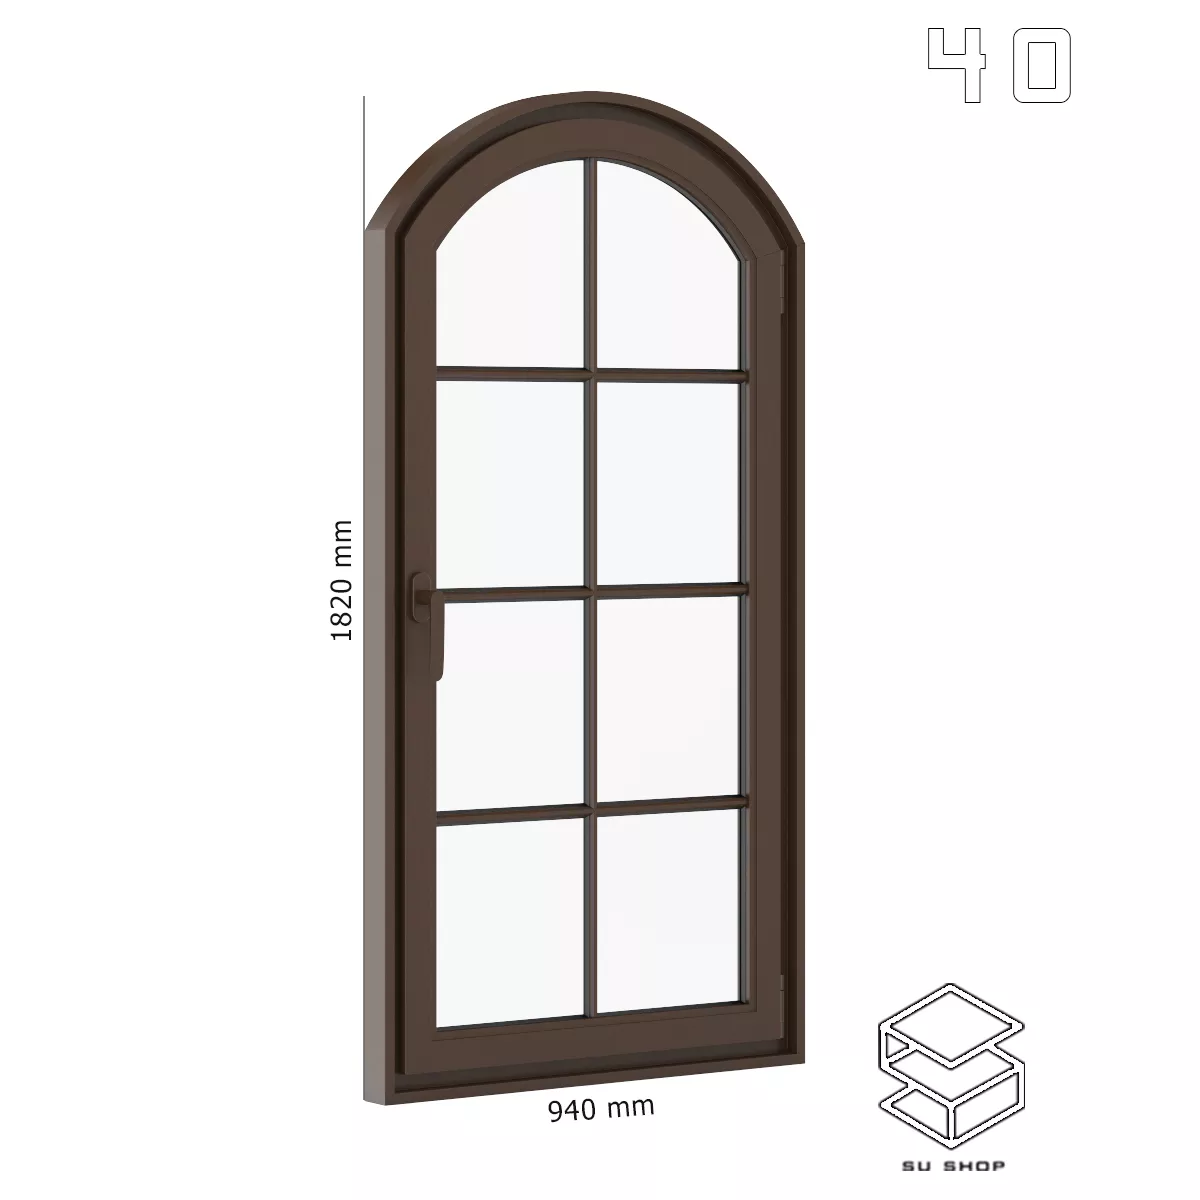 MODERN WINDOWS - SKETCHUP 3D MODEL - VRAY OR ENSCAPE - ID16782